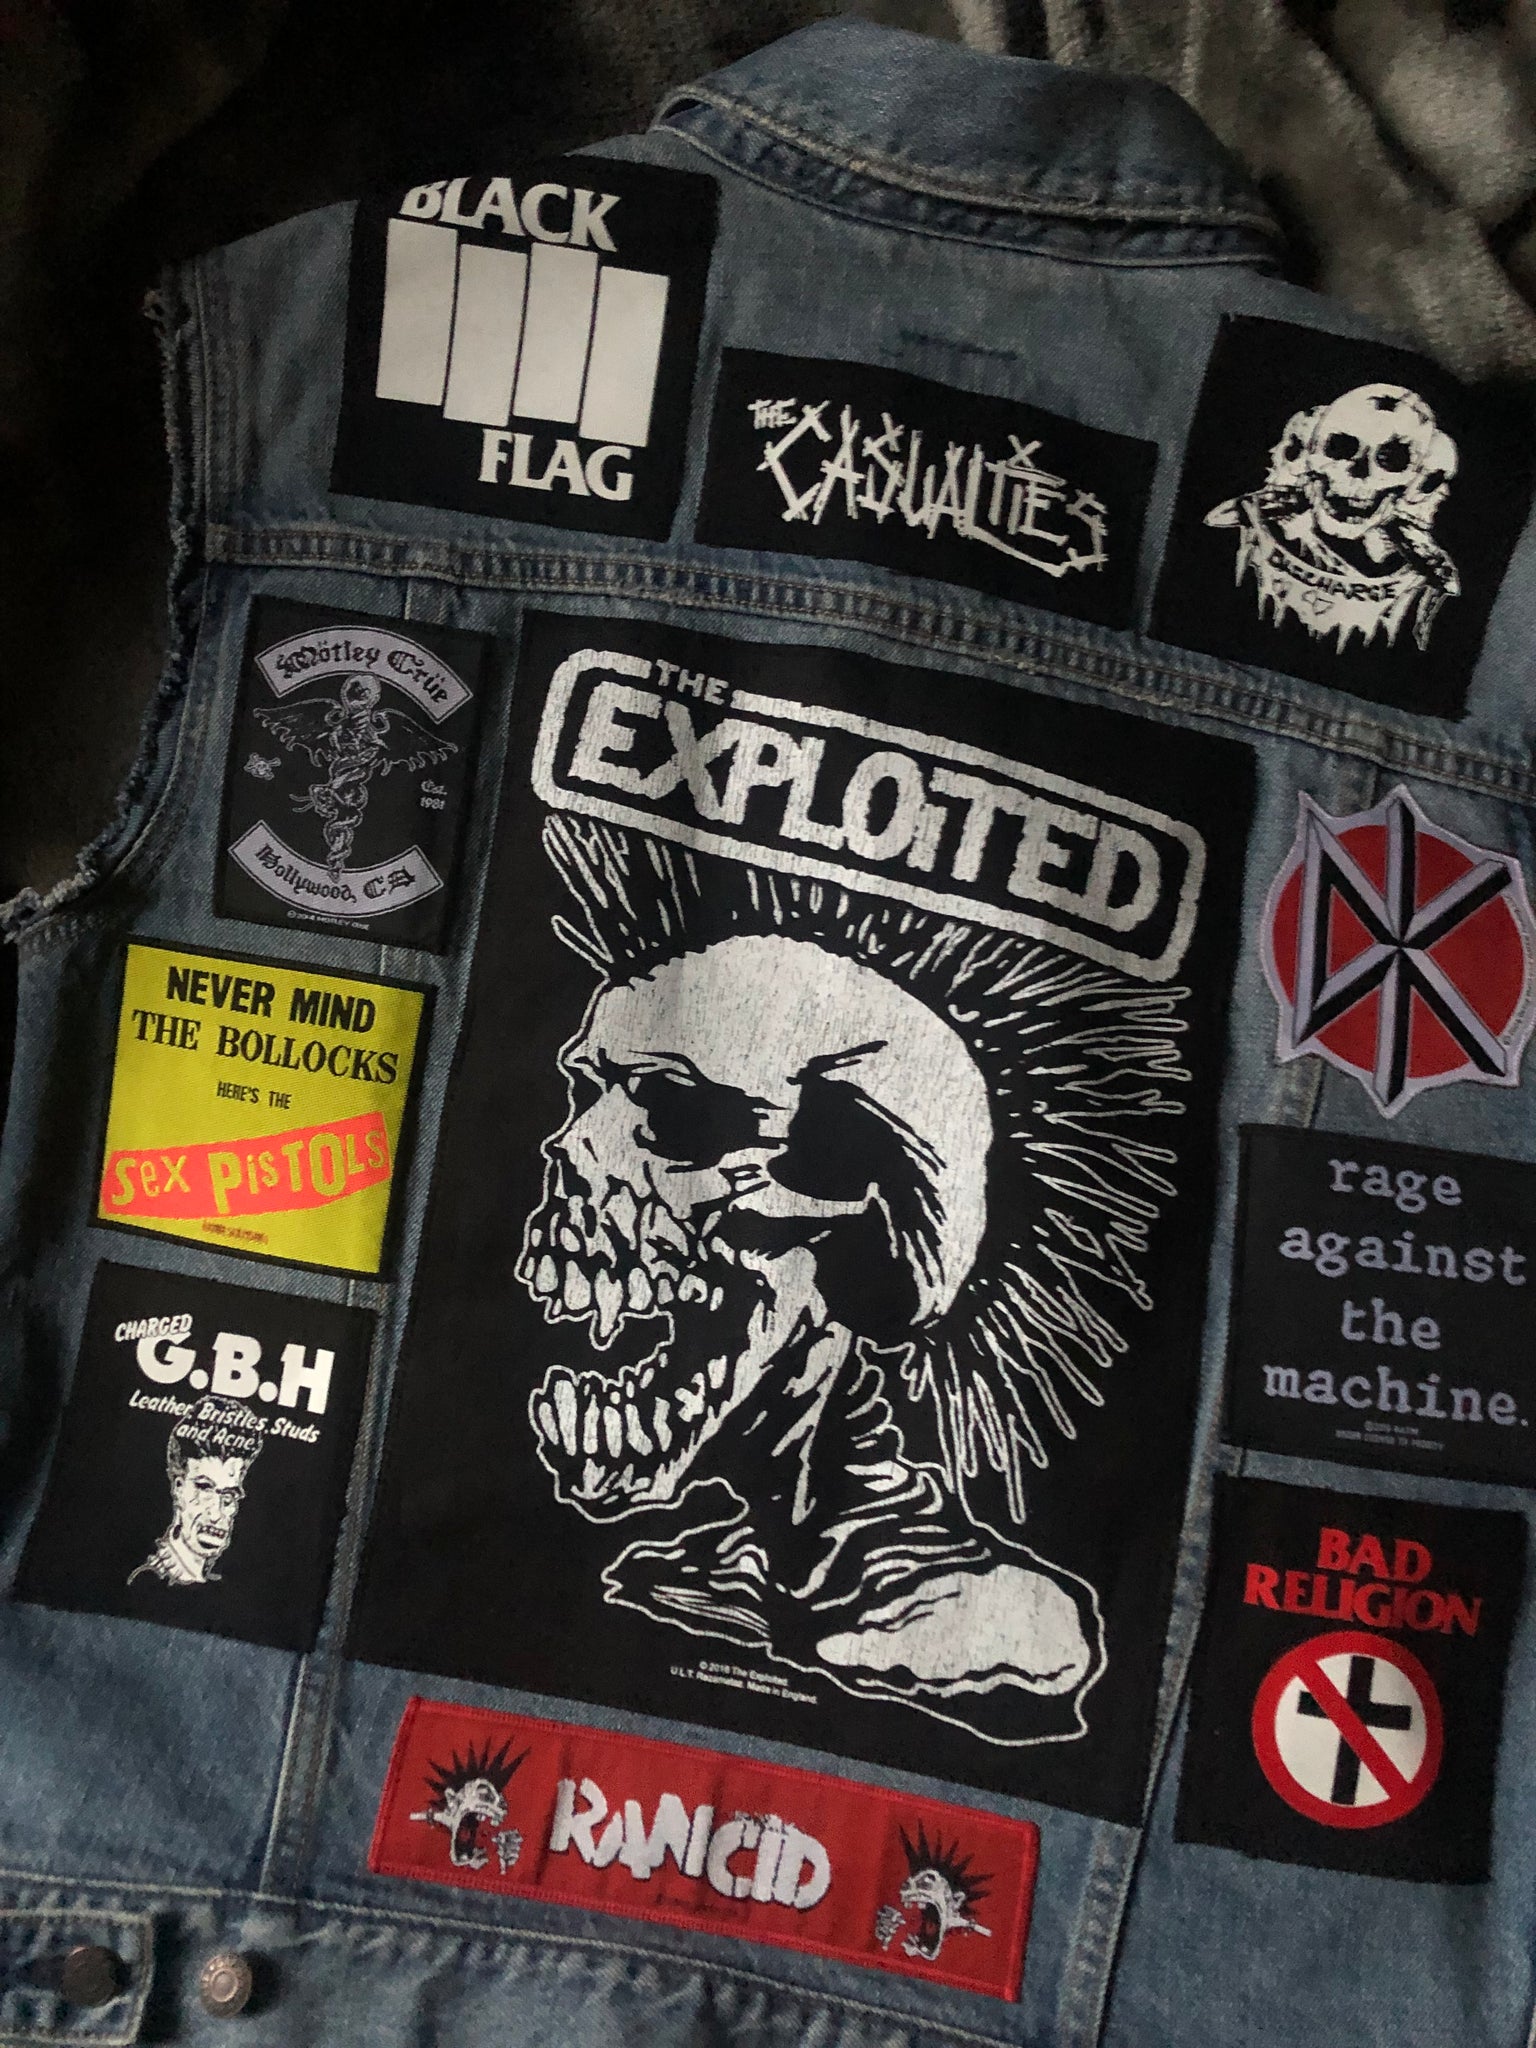 Distressed Punk Rock Black Denim Vest Cut-Off Battle Jacket